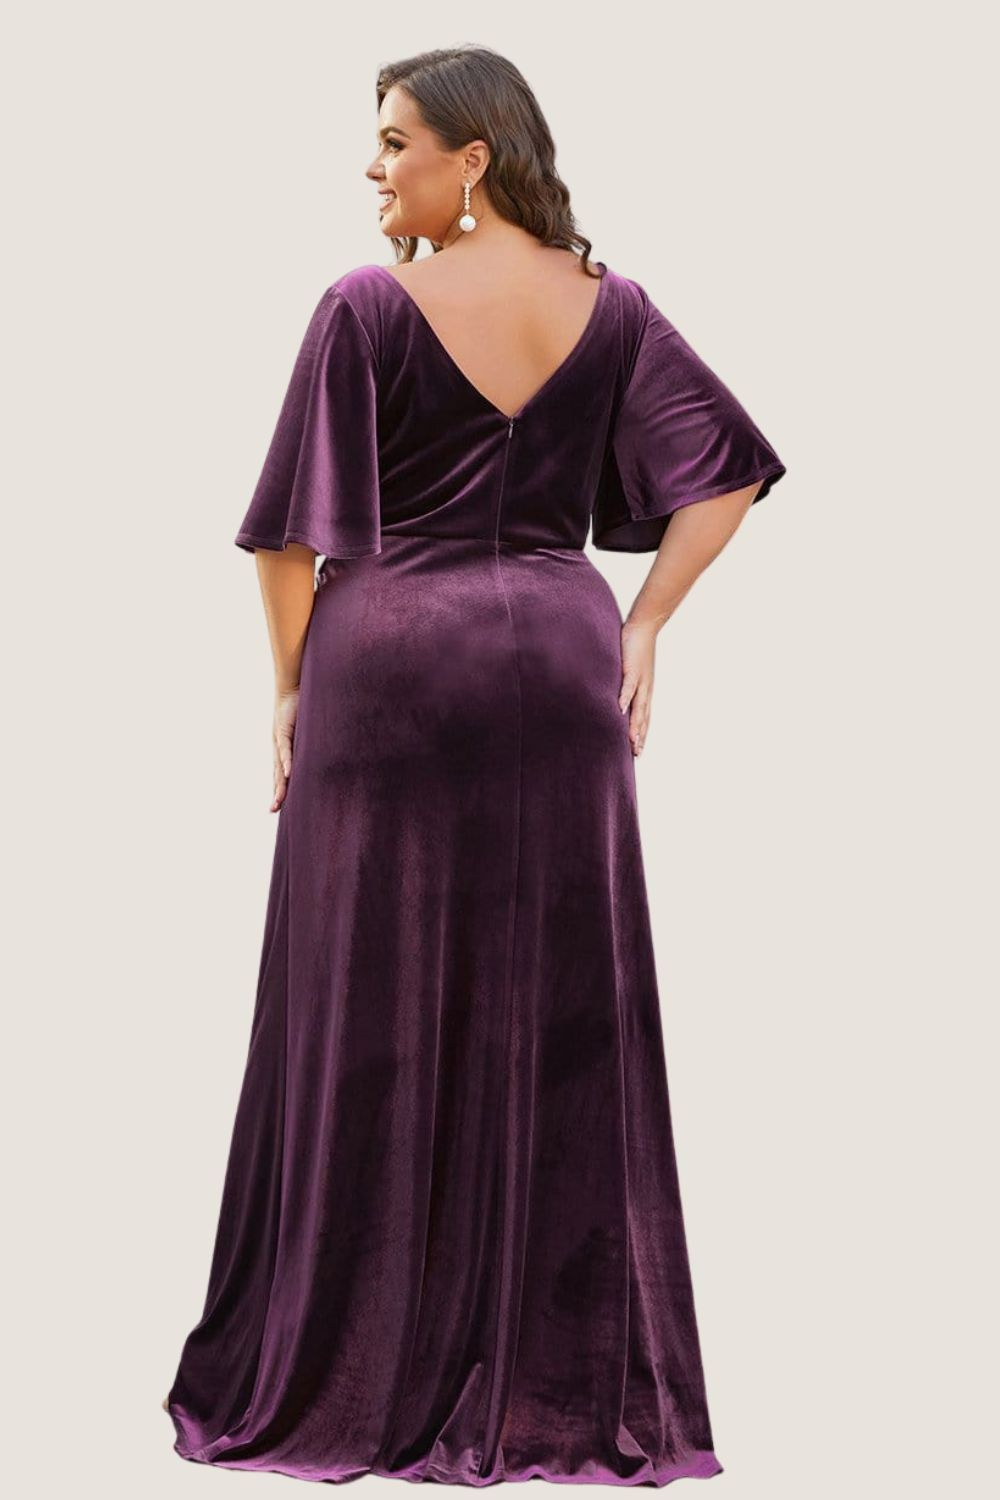 Layla Purple Velvet Bridesmaid Dress by Dressology